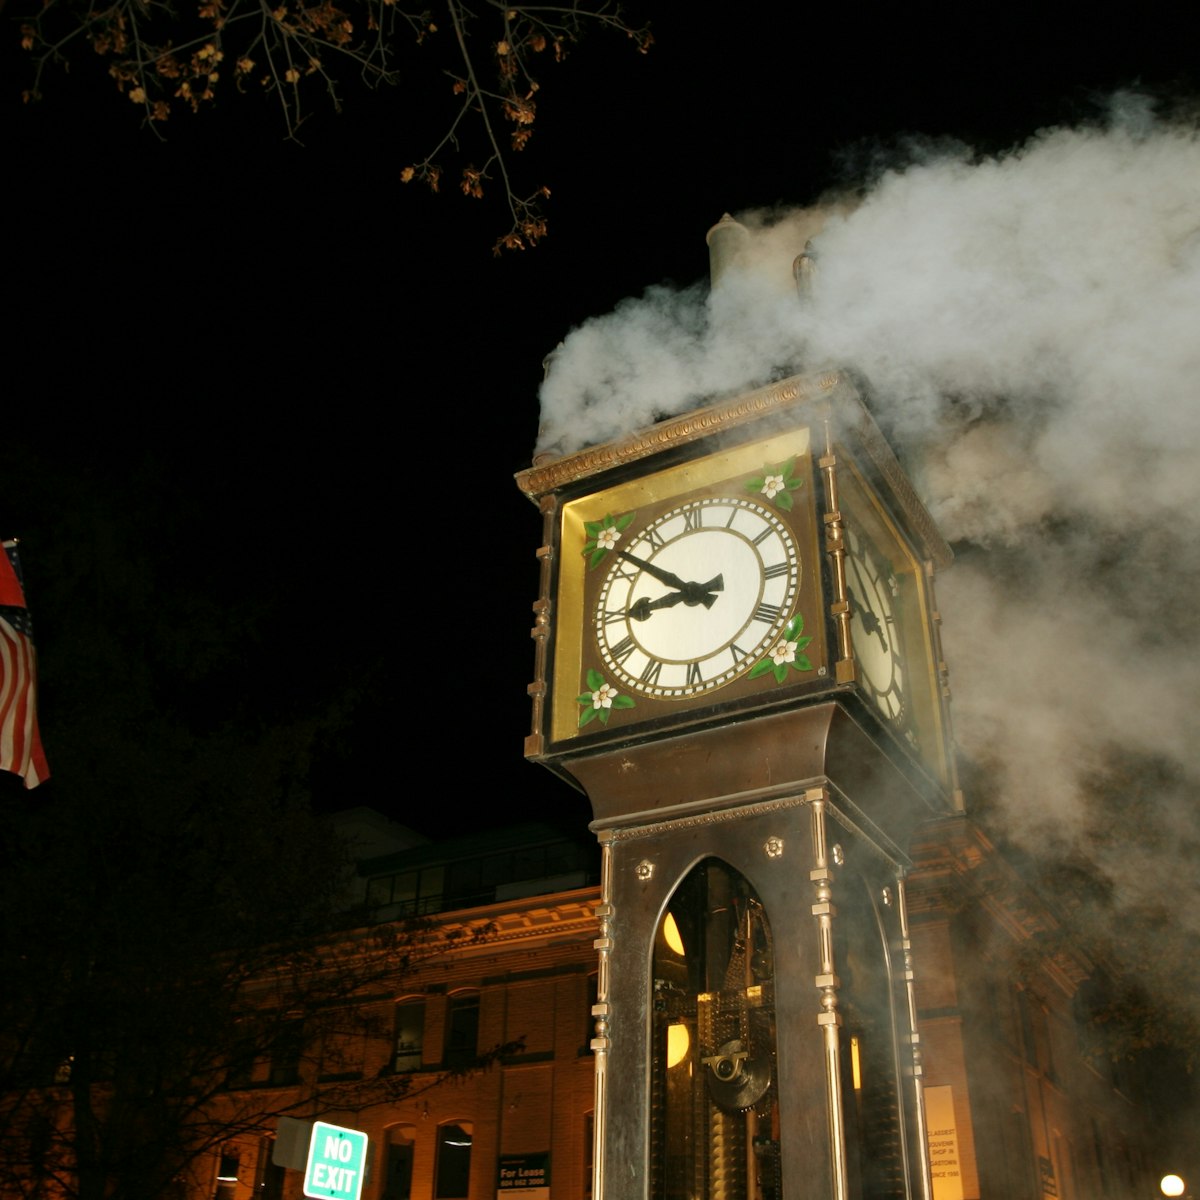 Gastown's famous steam-powered clock.